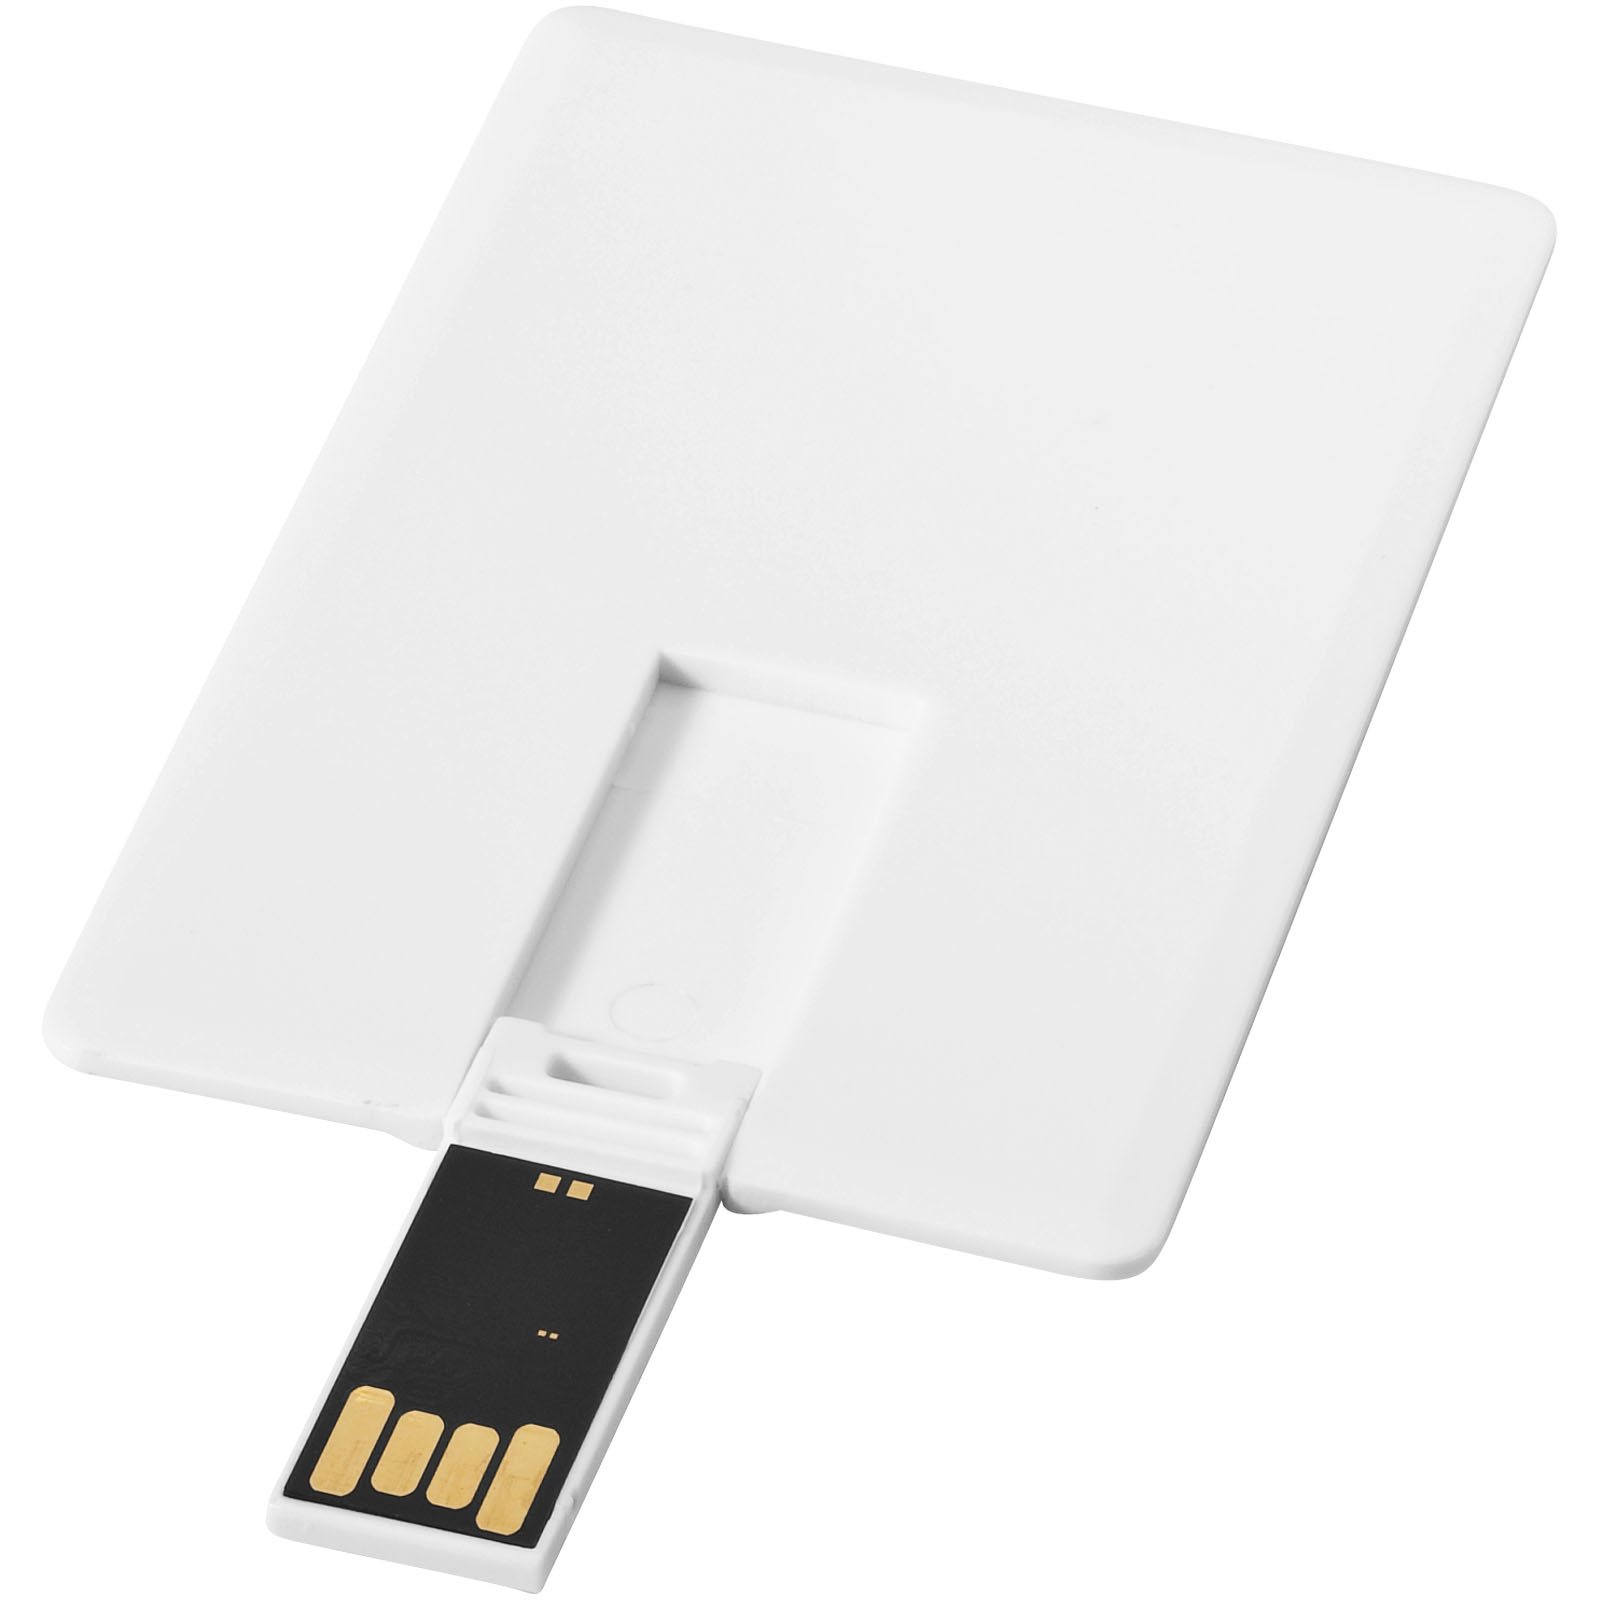 Technology - Slim card-shaped 4GB USB flash drive